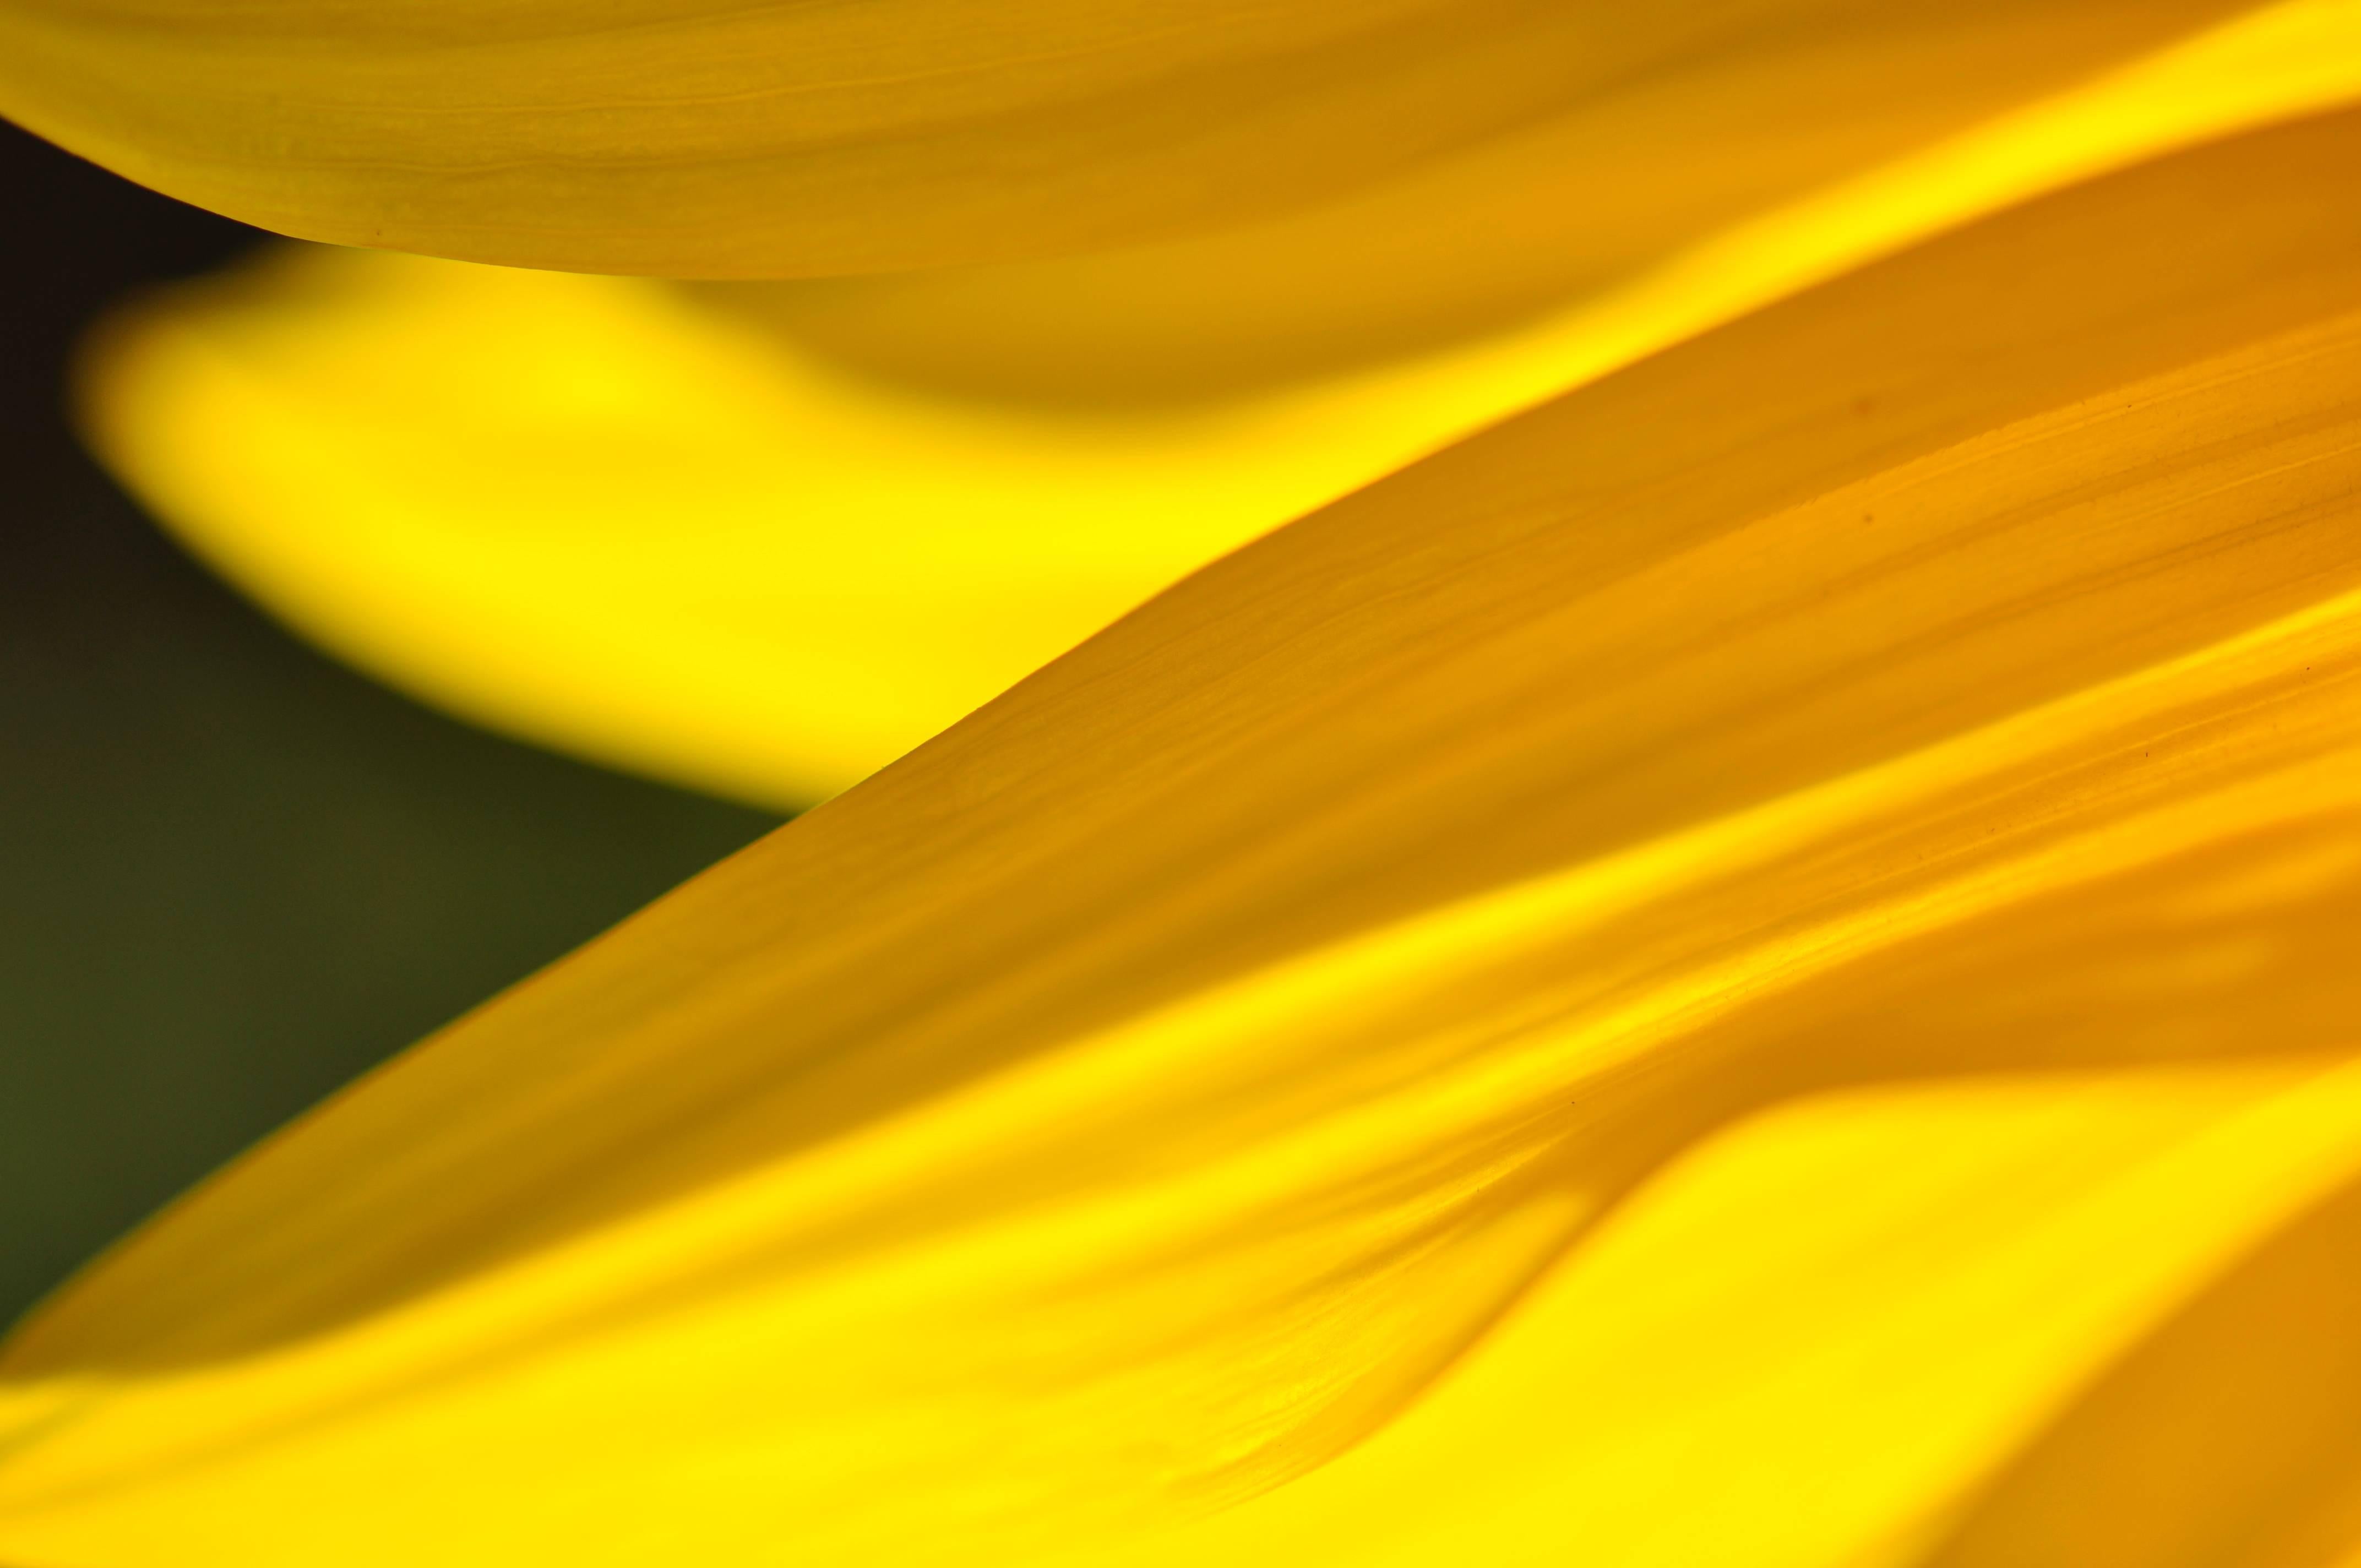 Gaétan Caron Abstract Photograph - "Grand-Soleil (Sunflower)" Botanical Close-Up Photograph, 2012